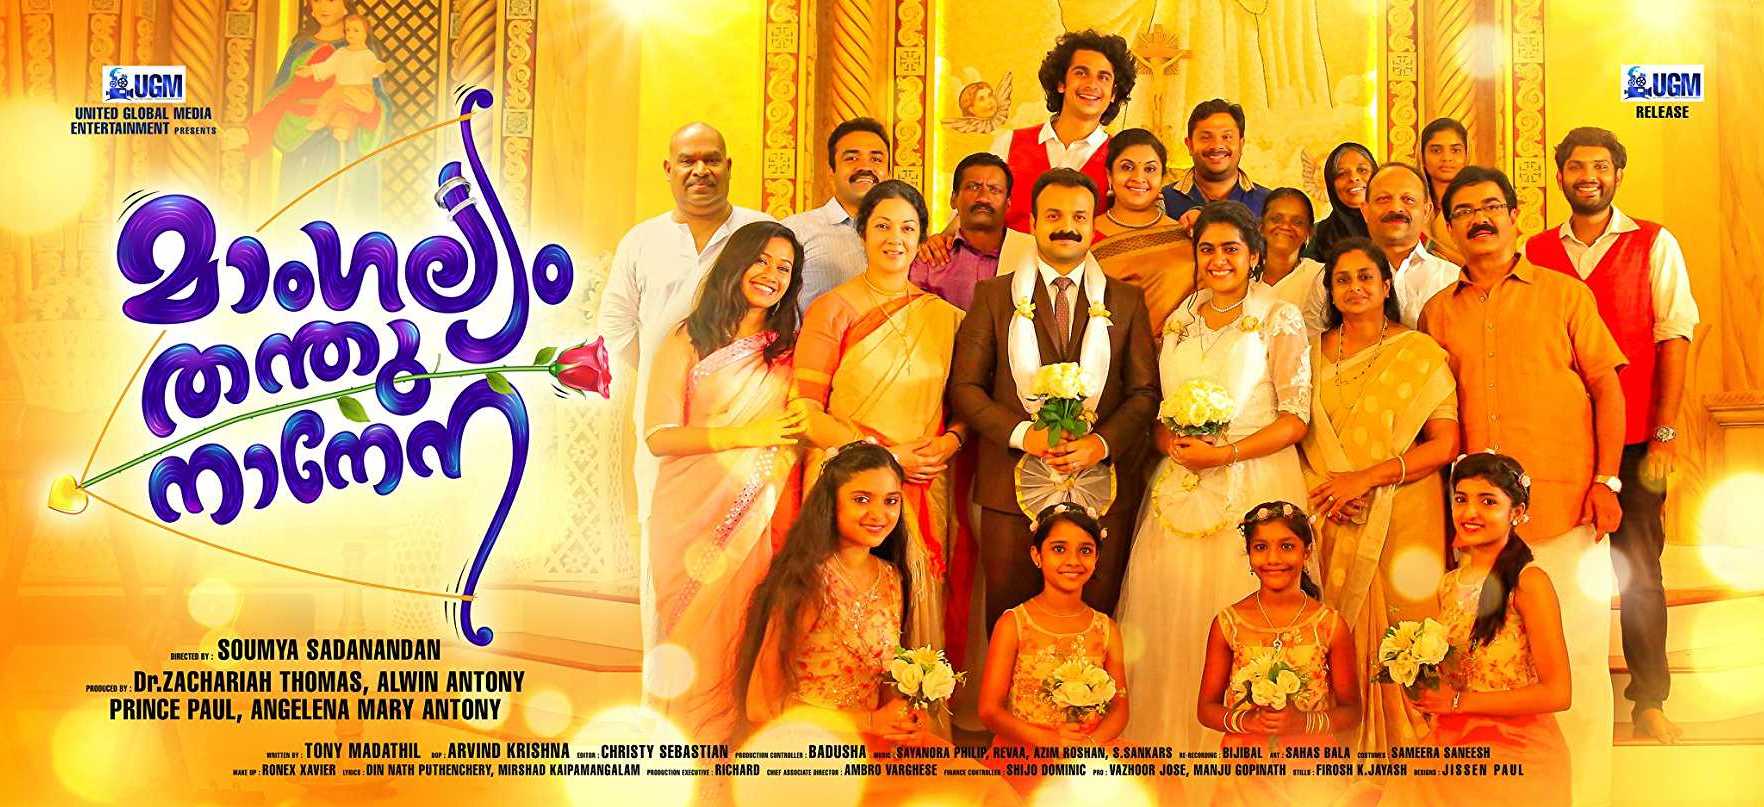 Mangalyam Thanthunanena Movie Reviews and Ratings